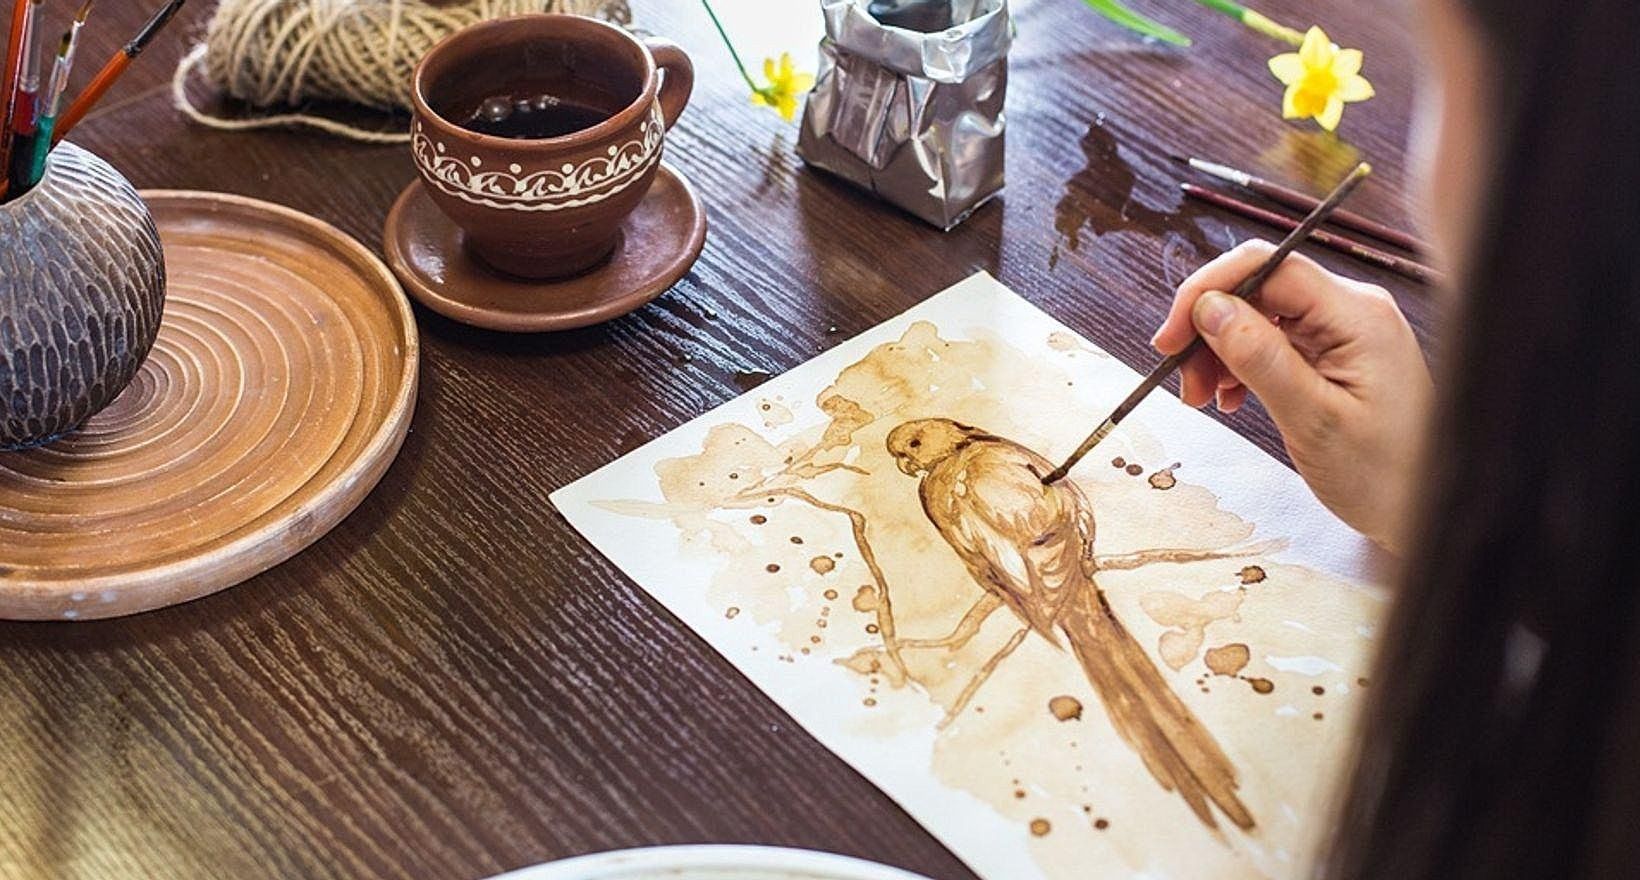 Мастер класс по кофе. Кофейная живопись мастер класс. Рисование кофе мастер класс. Мастер-класс кофе живопись. Живопись кофем.